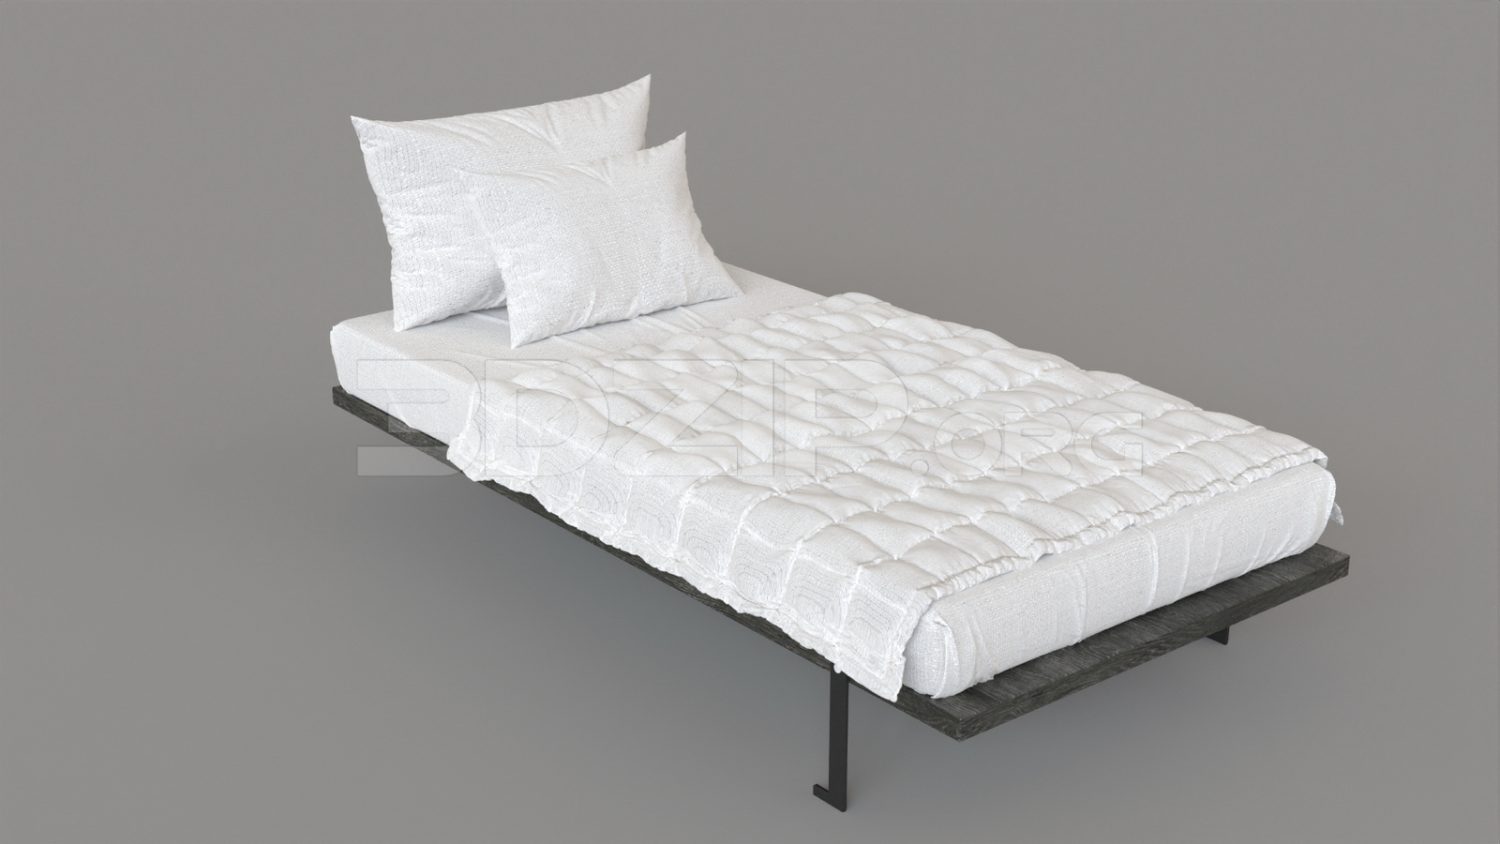 5007. Free 3D Bed Model Download